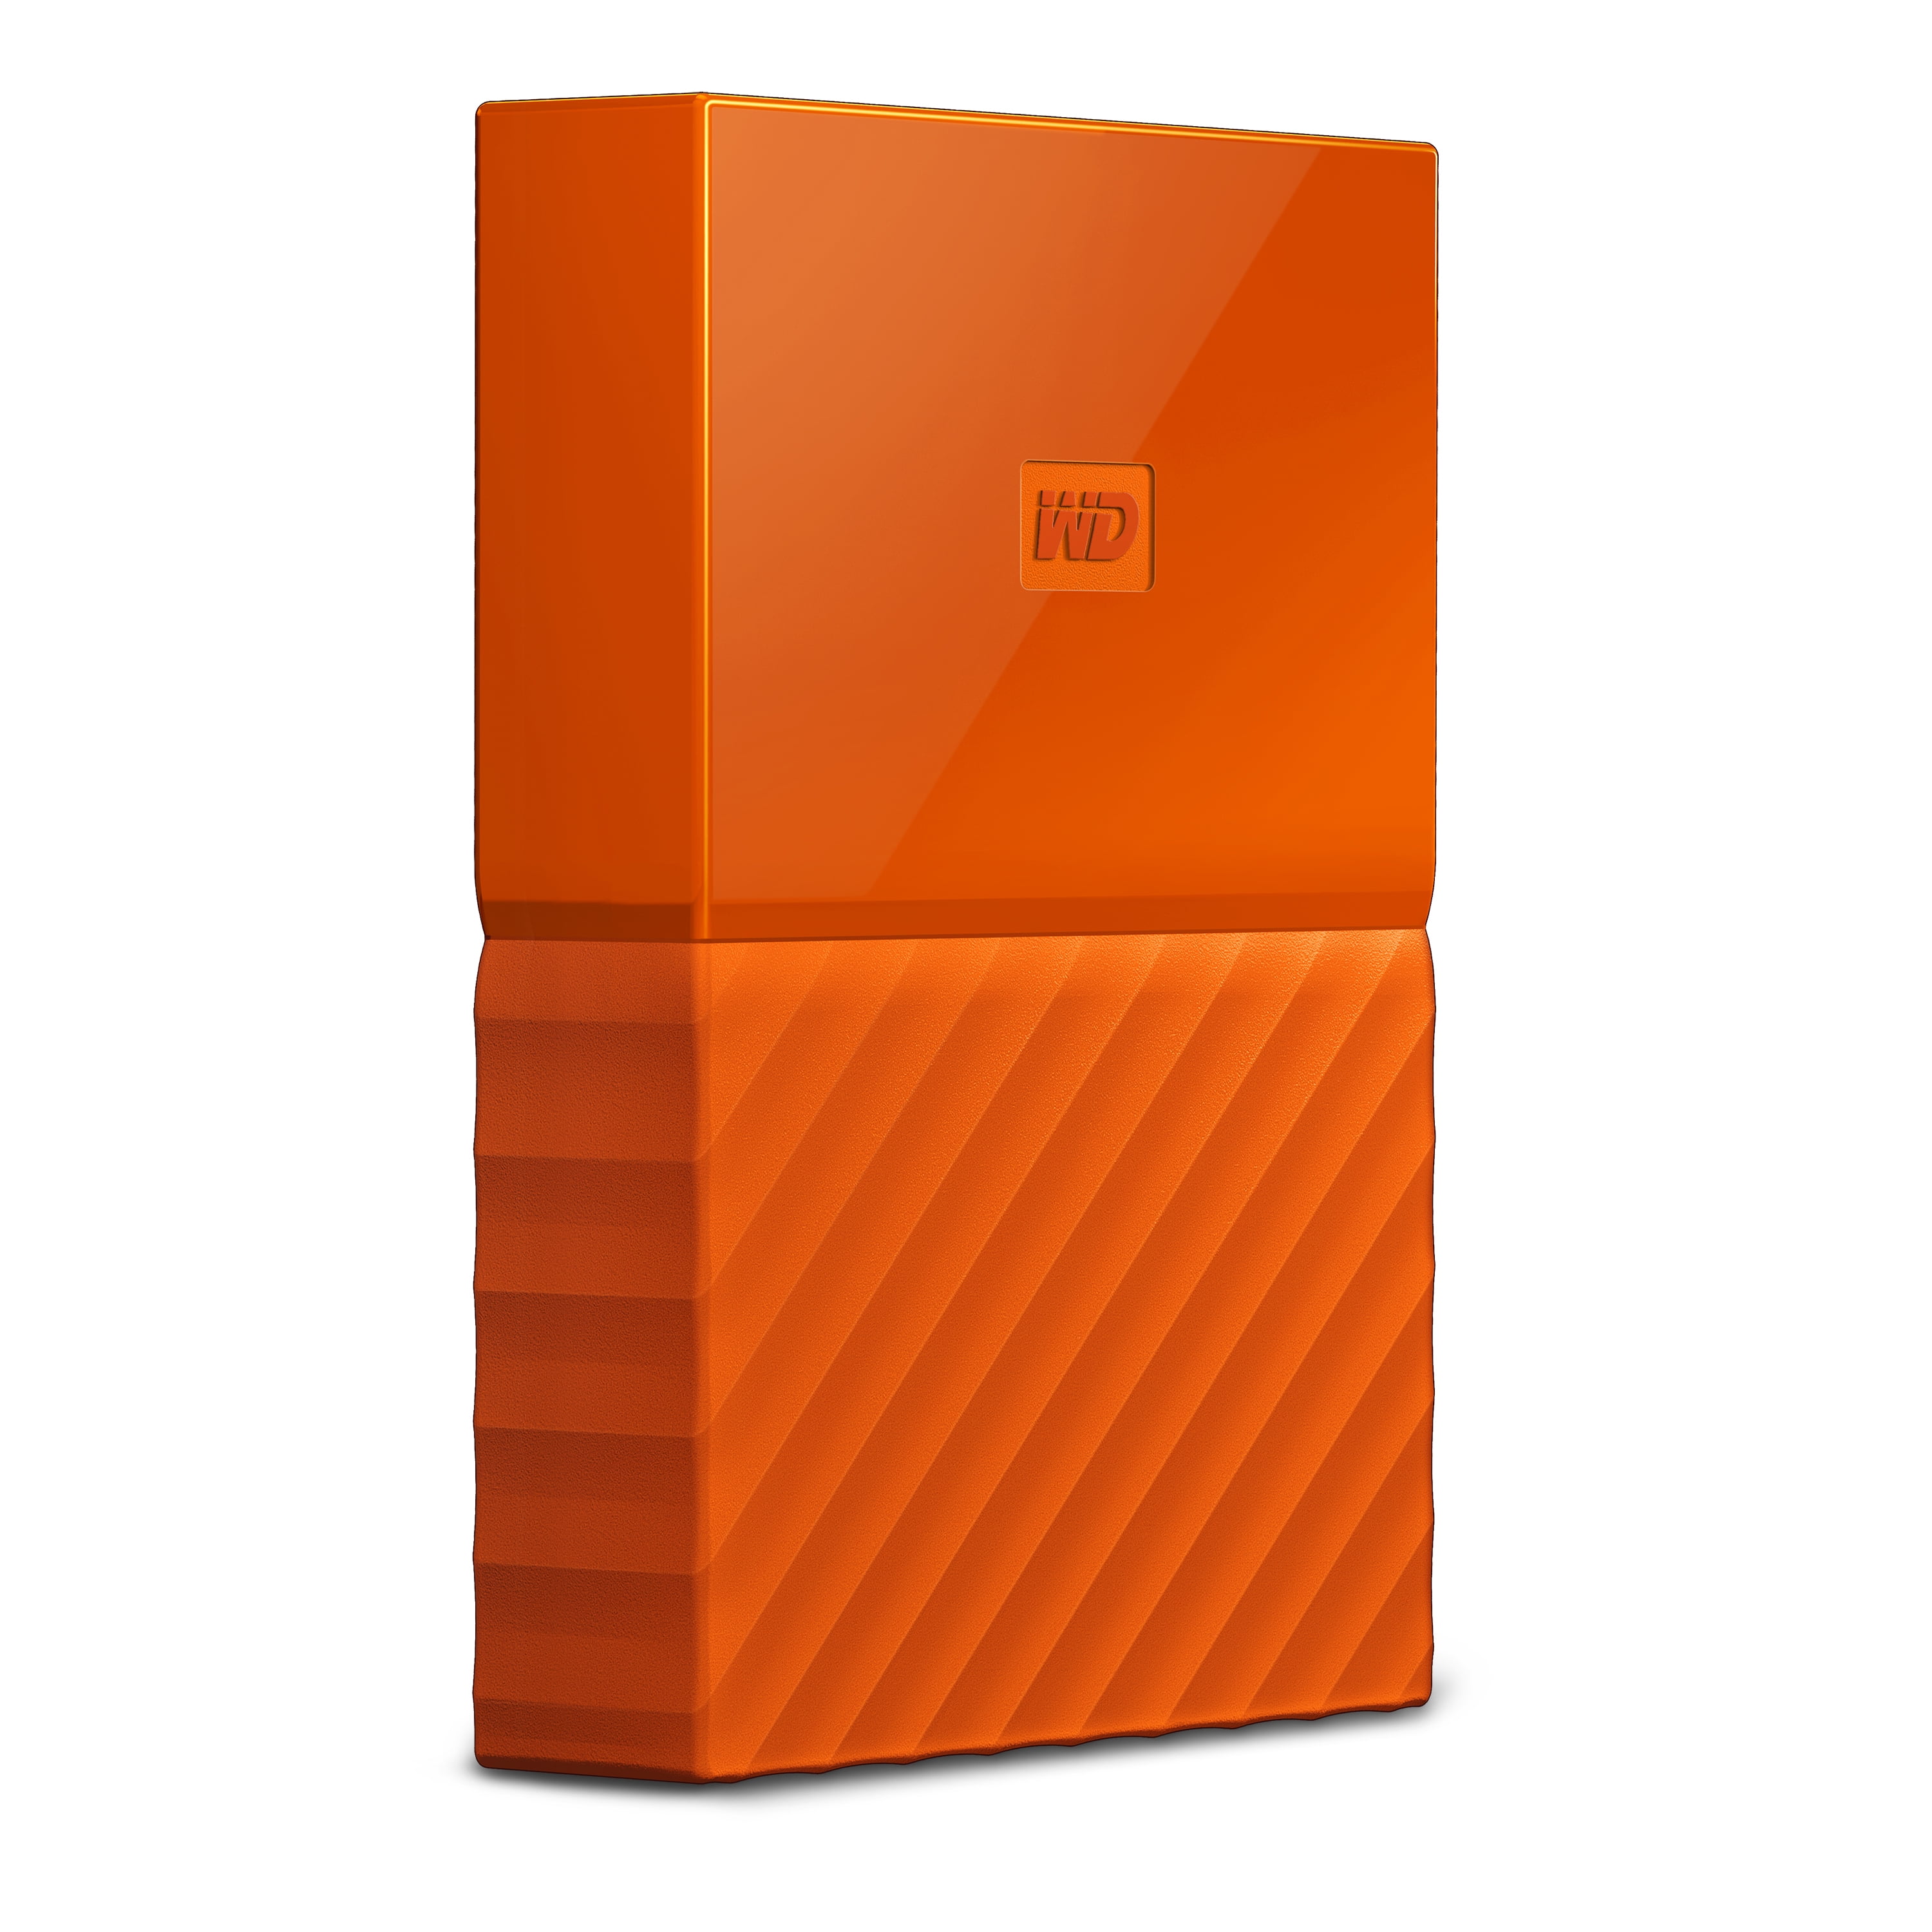 WD 4TB Orange My Passport  Portable External Hard Drive USB 3.0 WDBYFT0040BOR-WESN